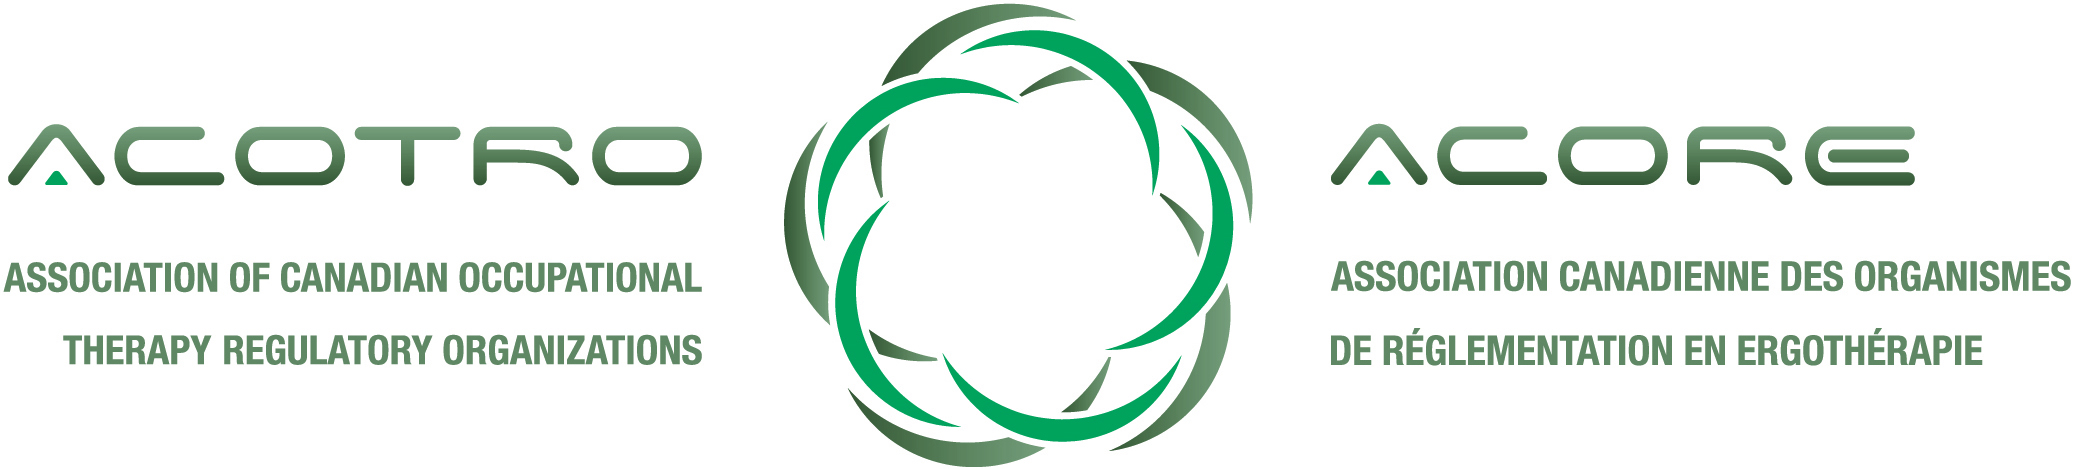 ACOTRO Logo